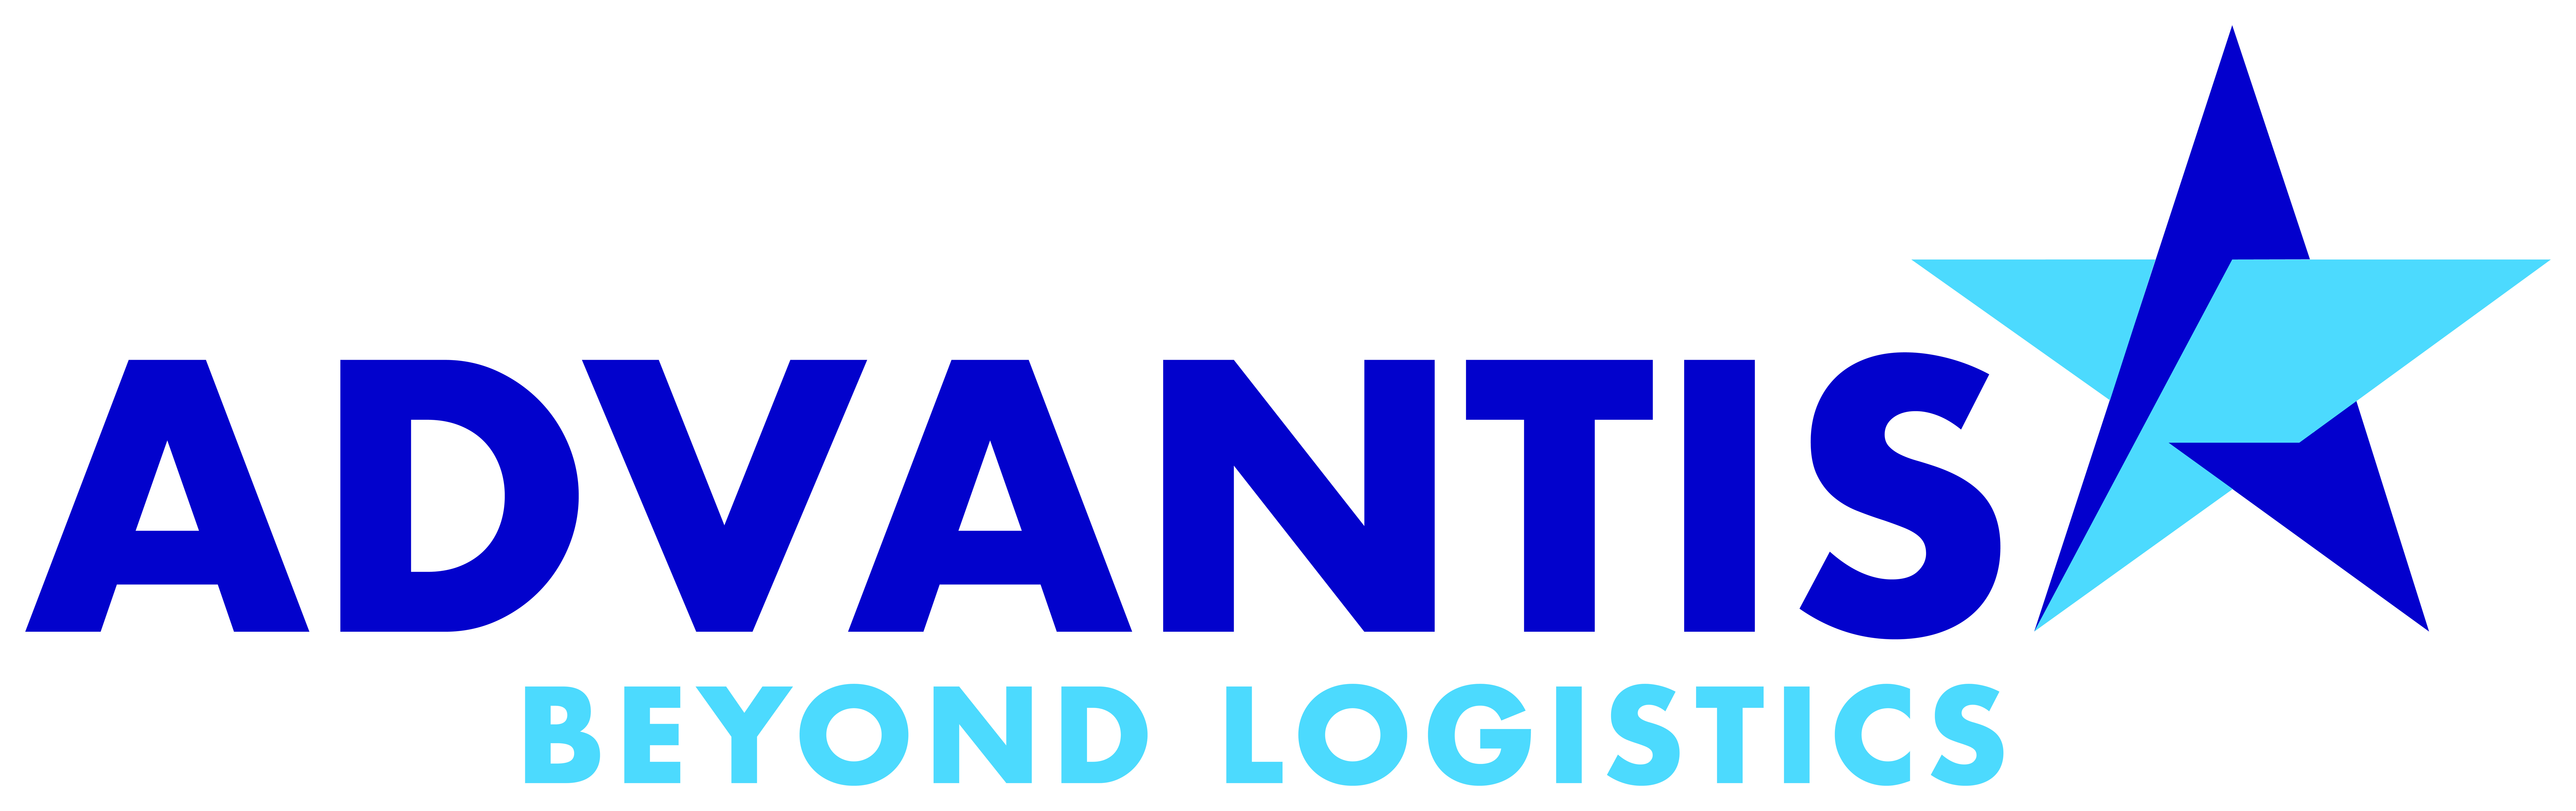 15701749431570174943_Advantis_Beyond_Logistics_Logo.jpg